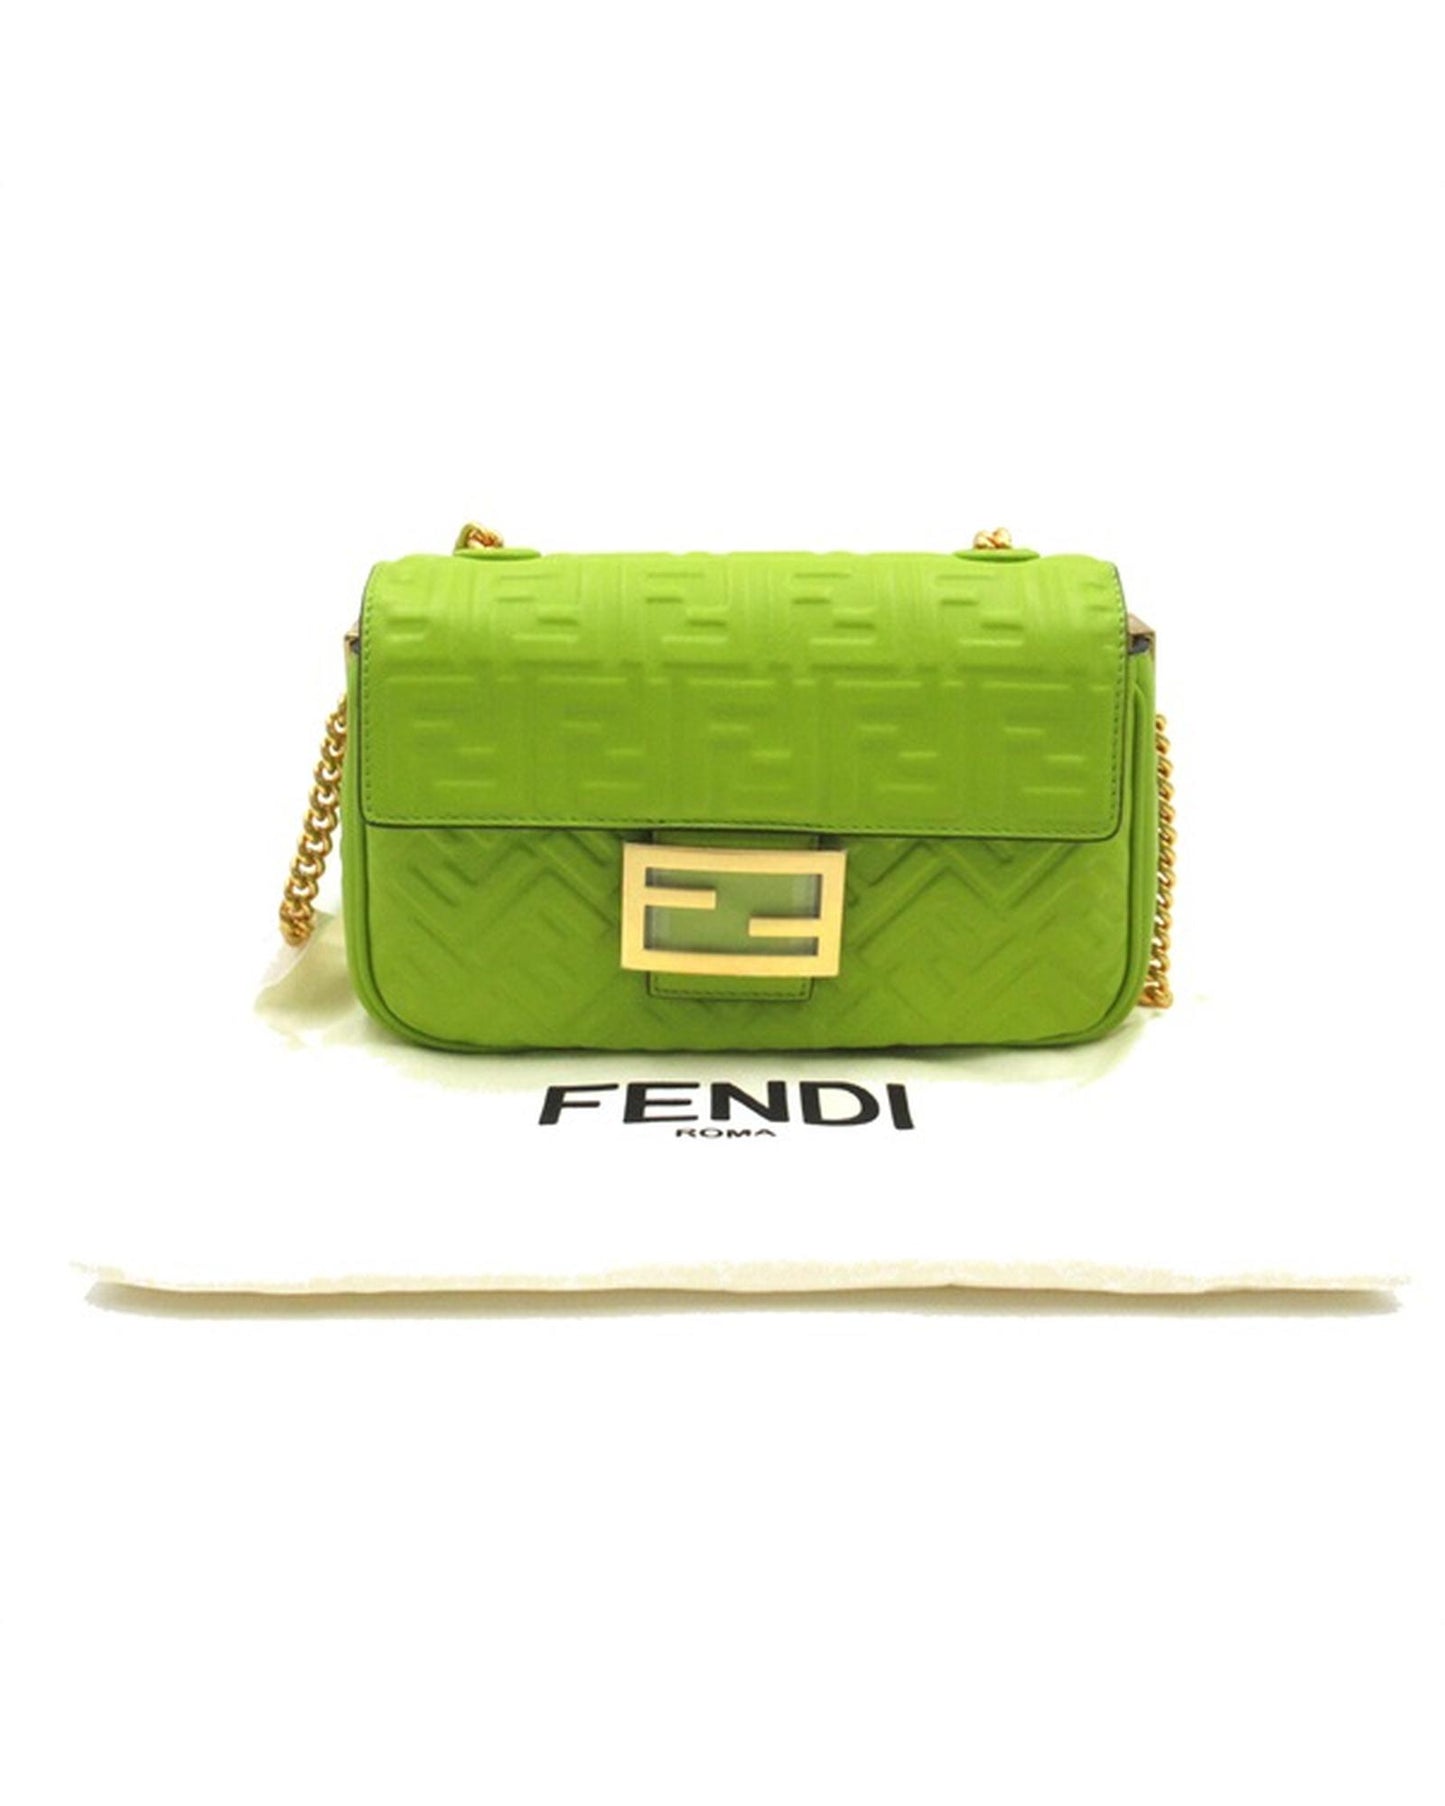 Fendi Women's Embossed Leather Chain Baguette Midi Bag in Green